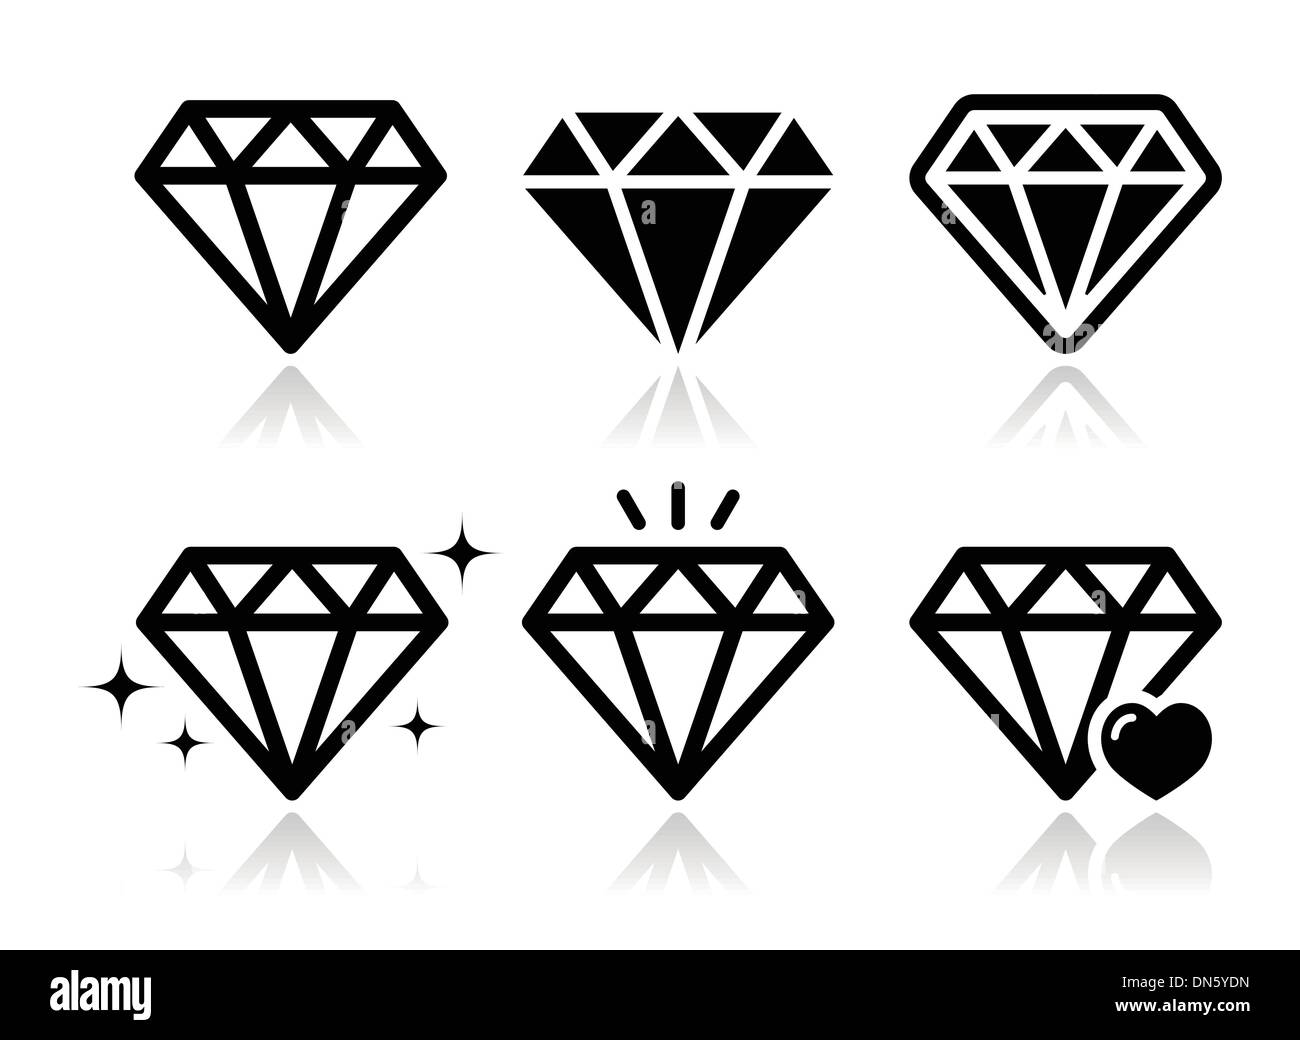 Diamond vector icons set Stock Vector